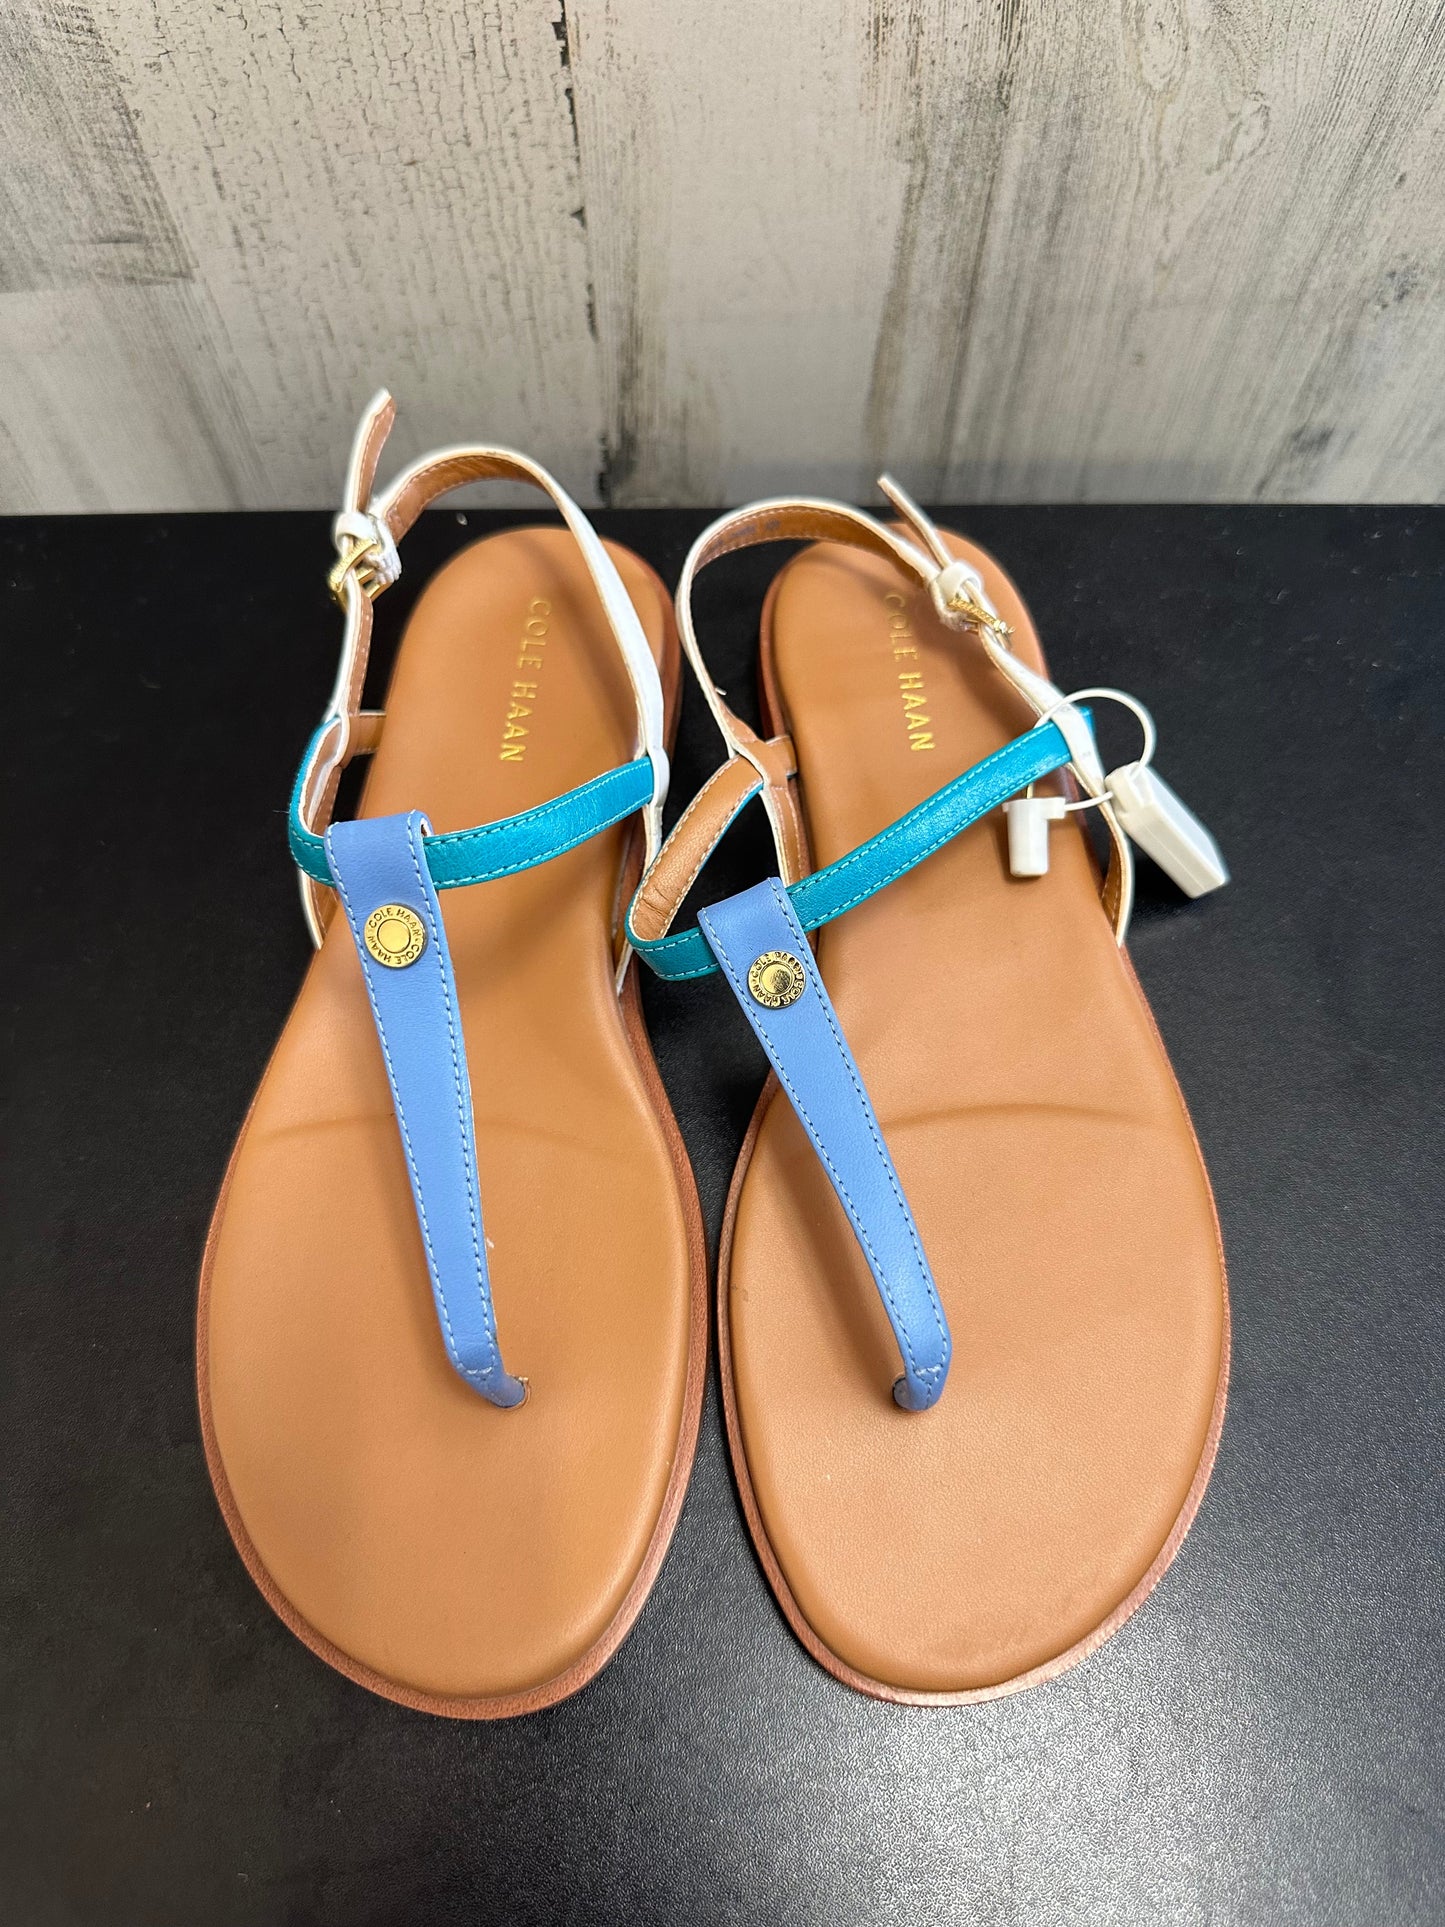 Blue & Brown Sandals Flats Cole-haan, Size 6